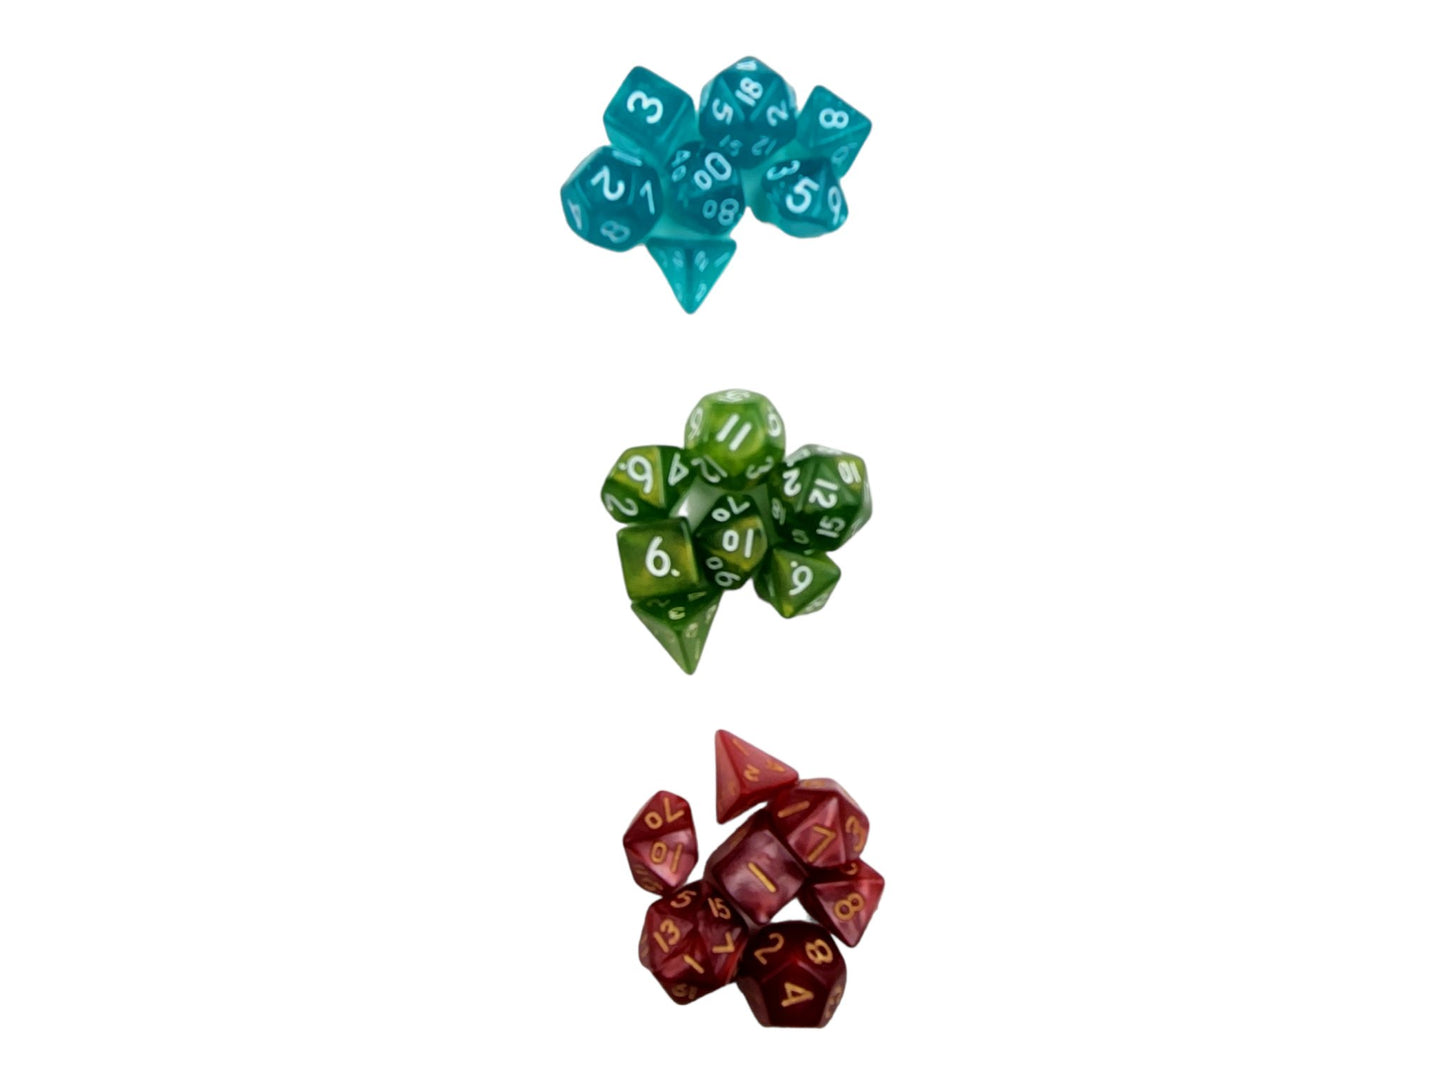 Creature dice tube with 3 sets of mini dice - Rowan Gate